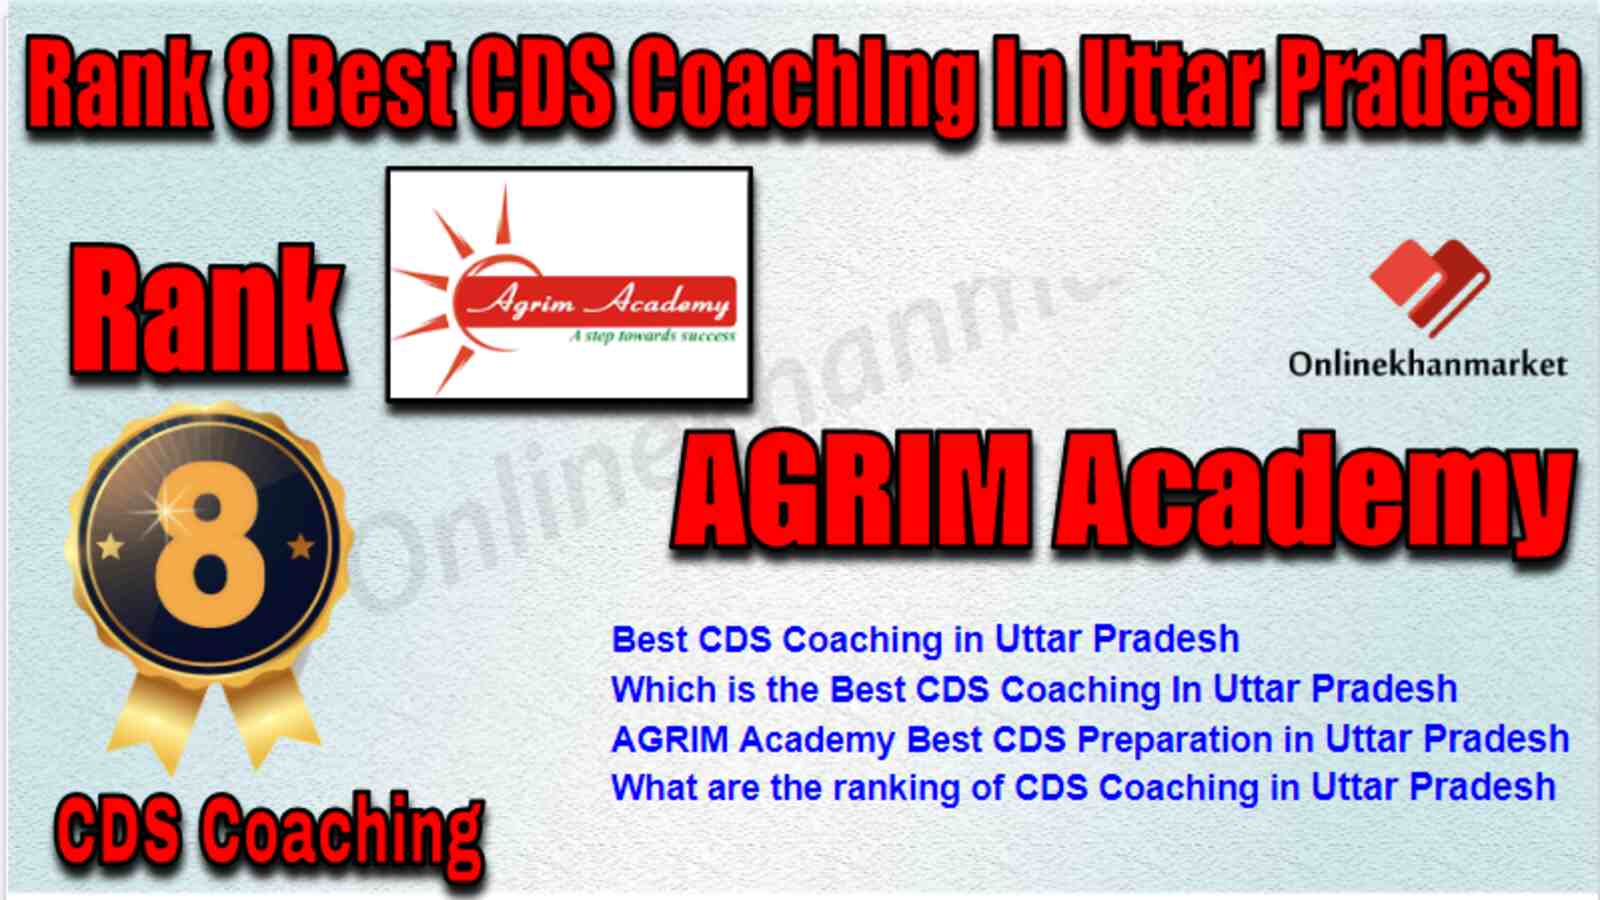 Rank 8 Best CDS Coaching in Uttar Pradesh